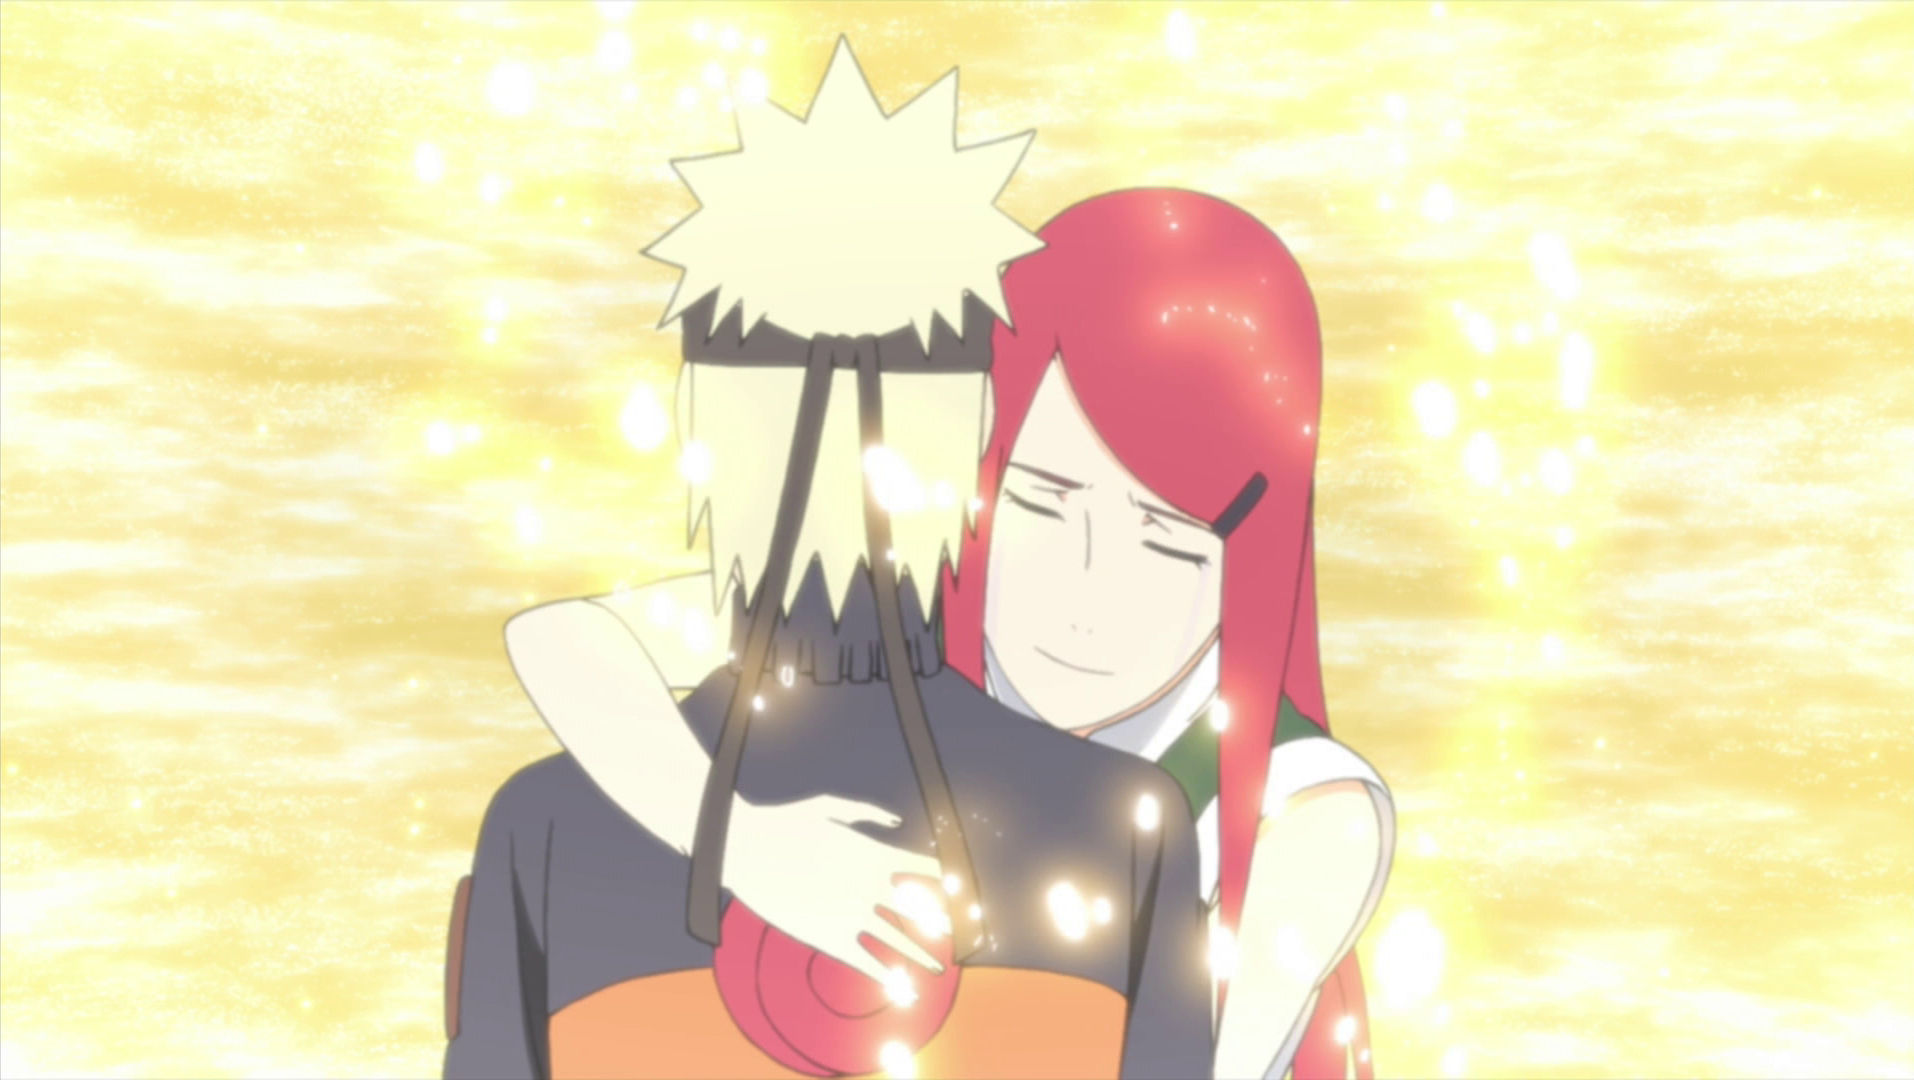 Imagine if Naruto saw a list of “Naruto” and “Naruto Shippuden